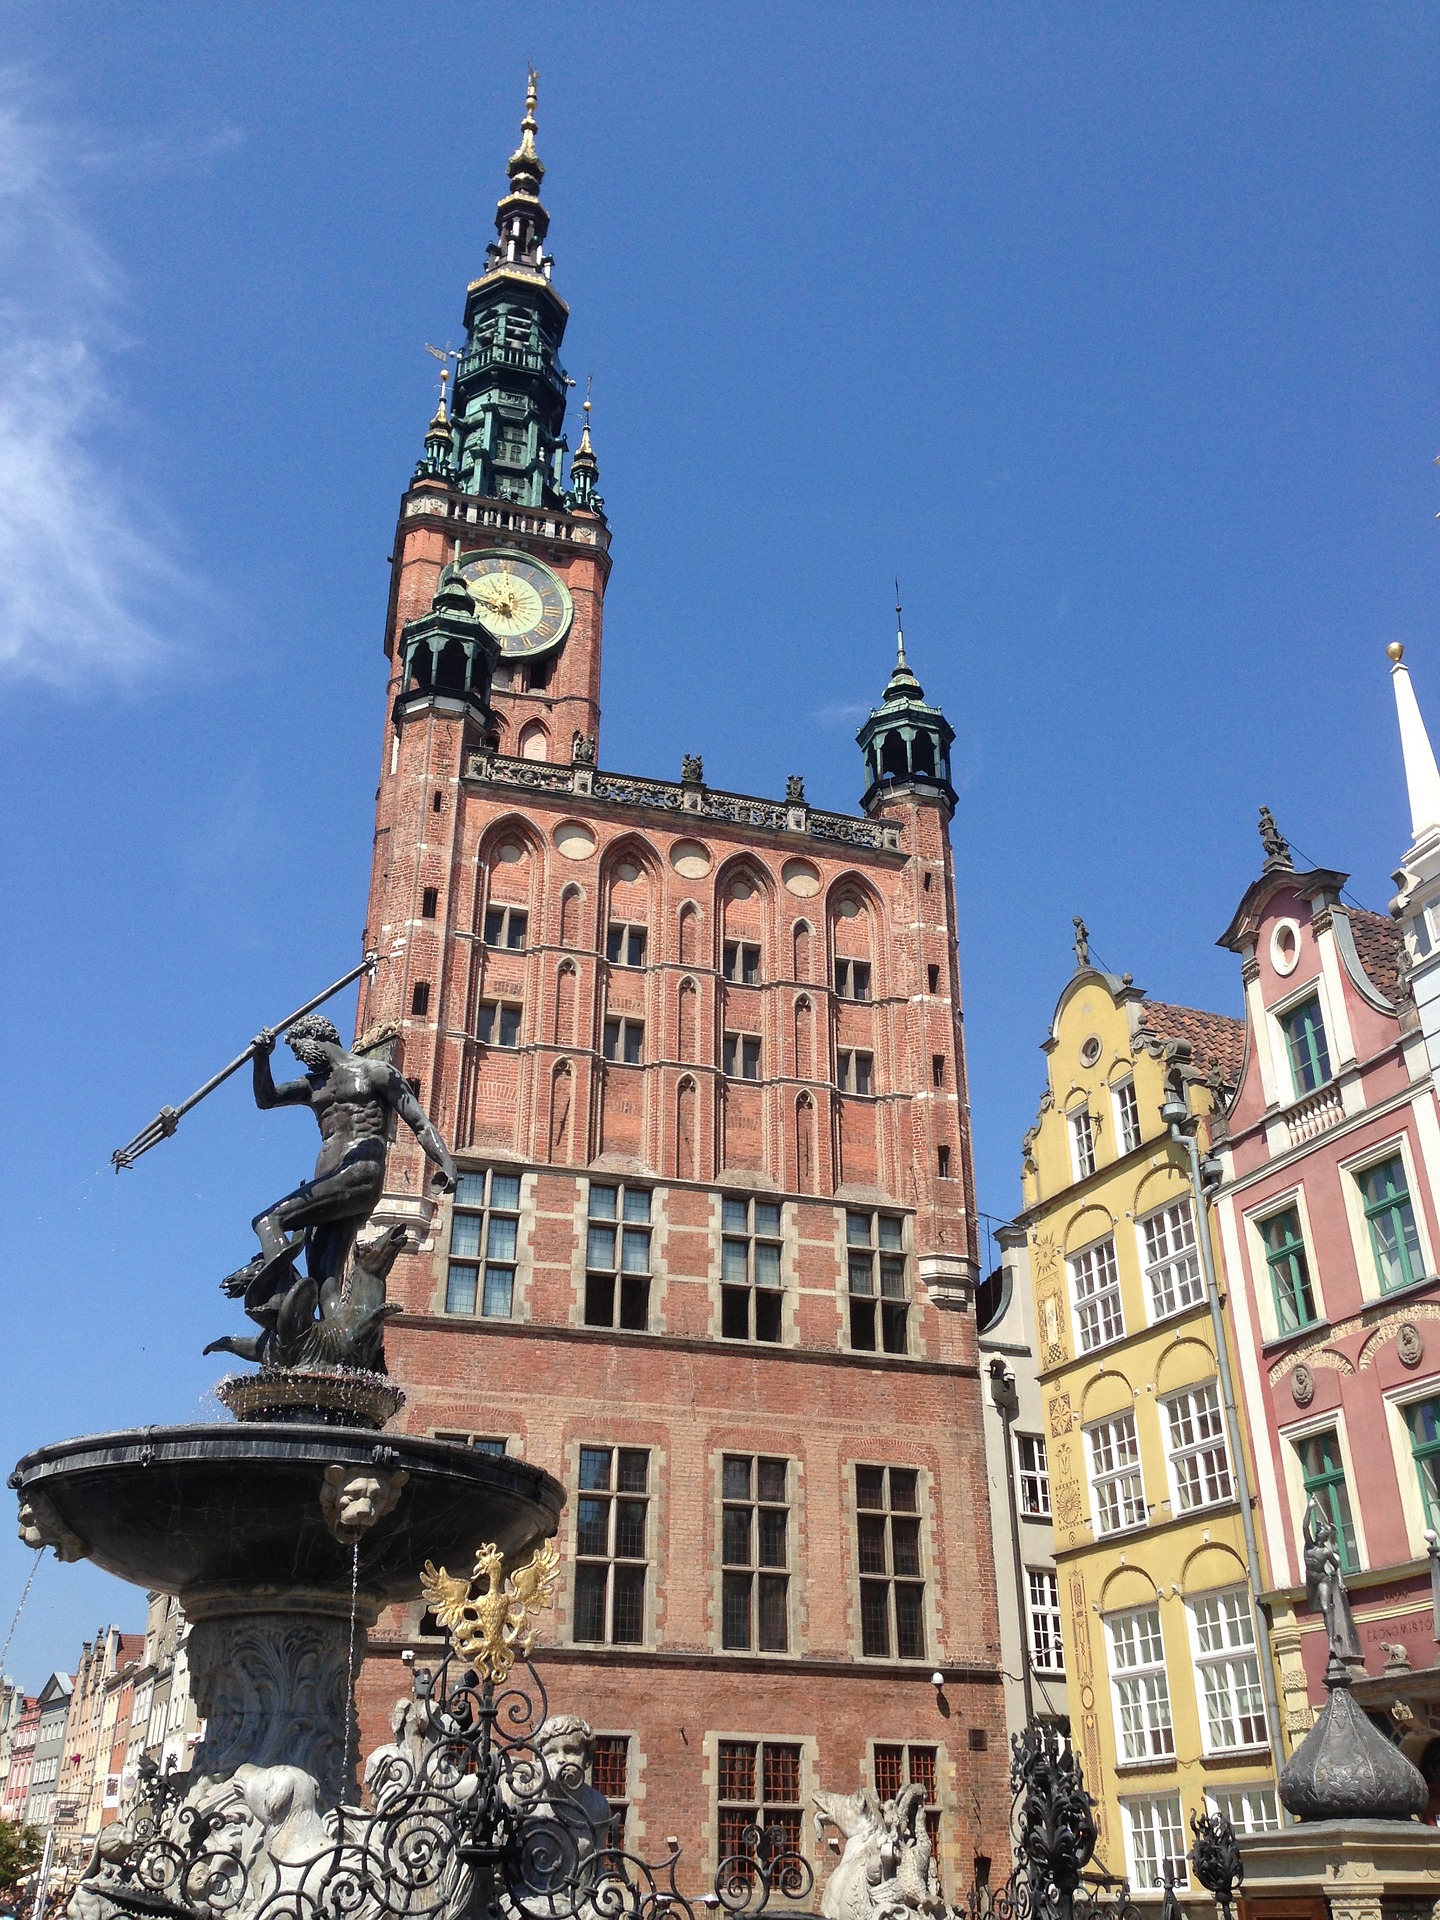 Neptunbrunnen in der Altstadt von Danzig Gdansk in Polen